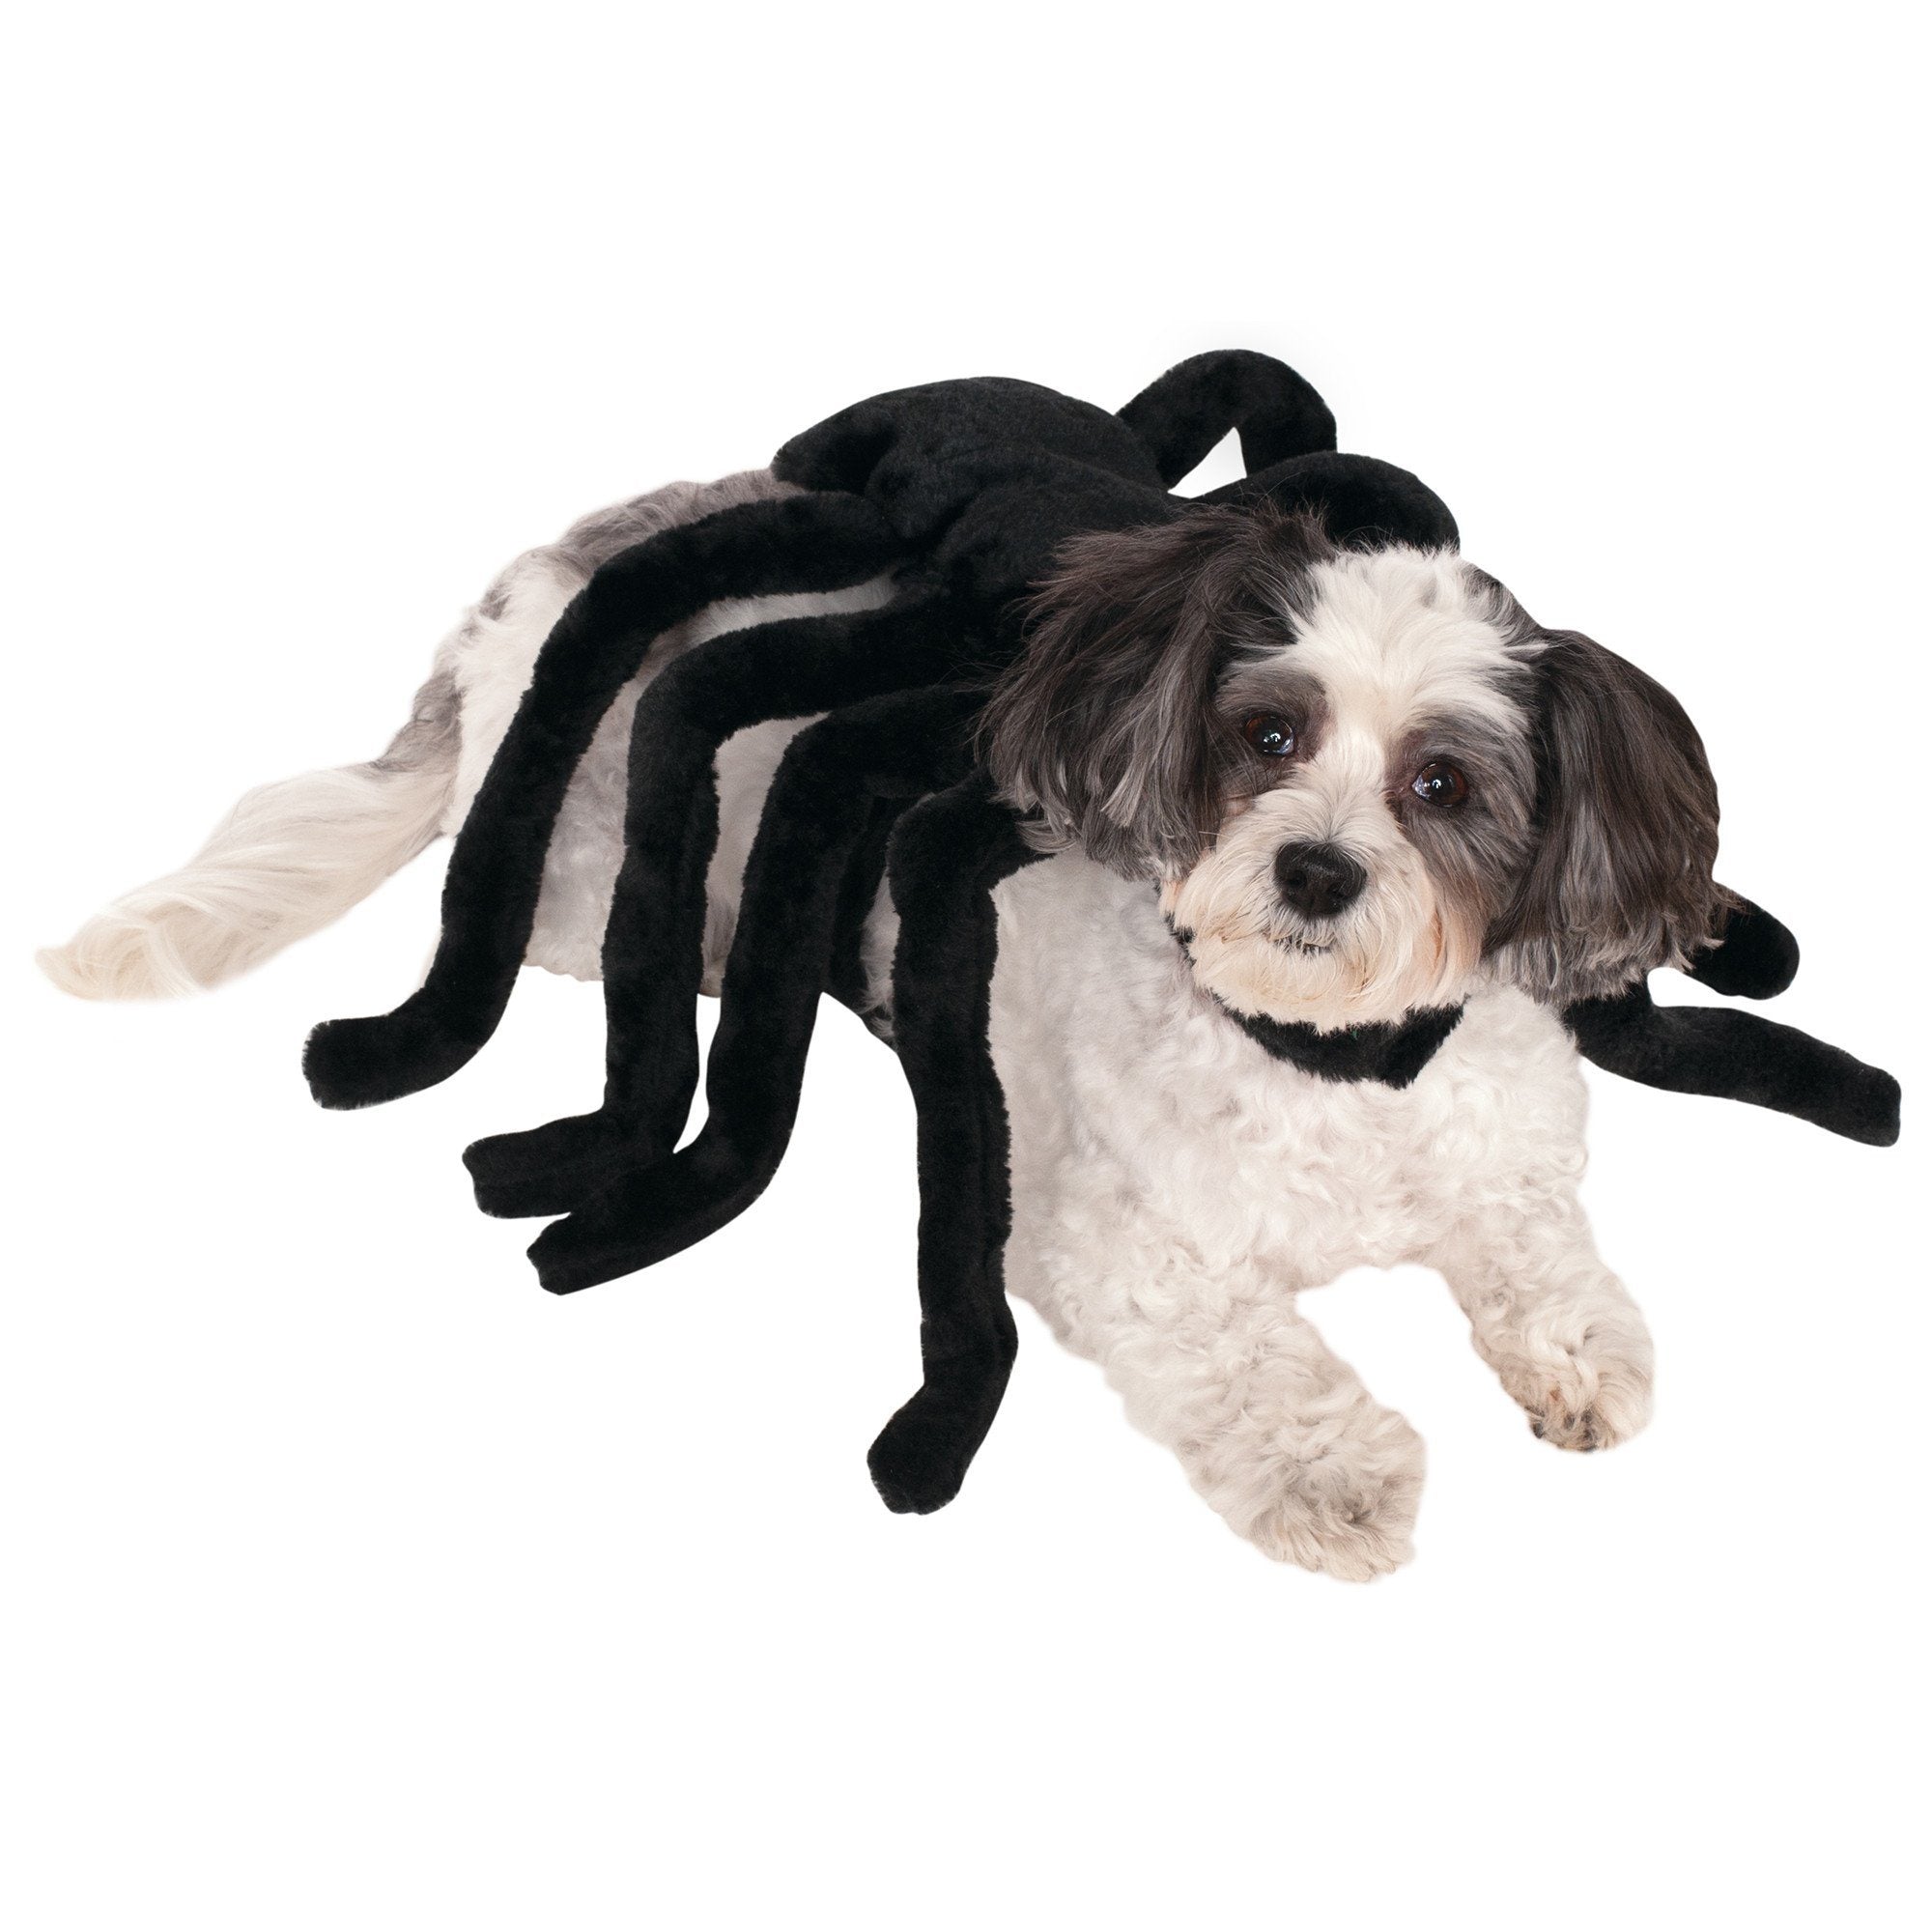 Spider Dog Costume - L